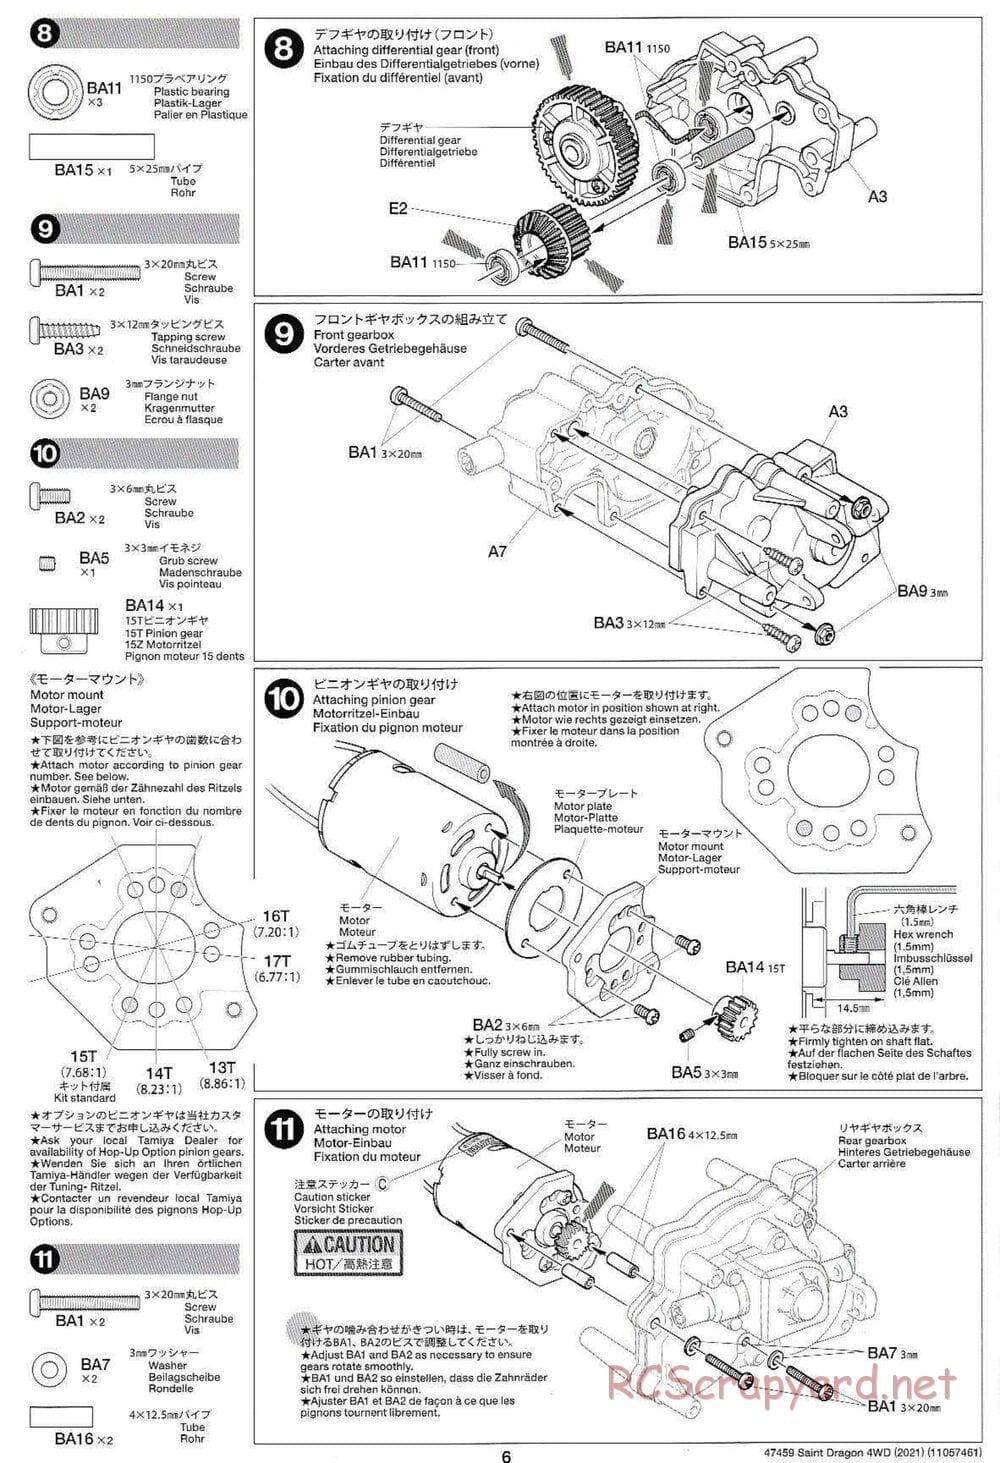 Tamiya - Saint Dragon (2021) Chassis - Manual - Page 6